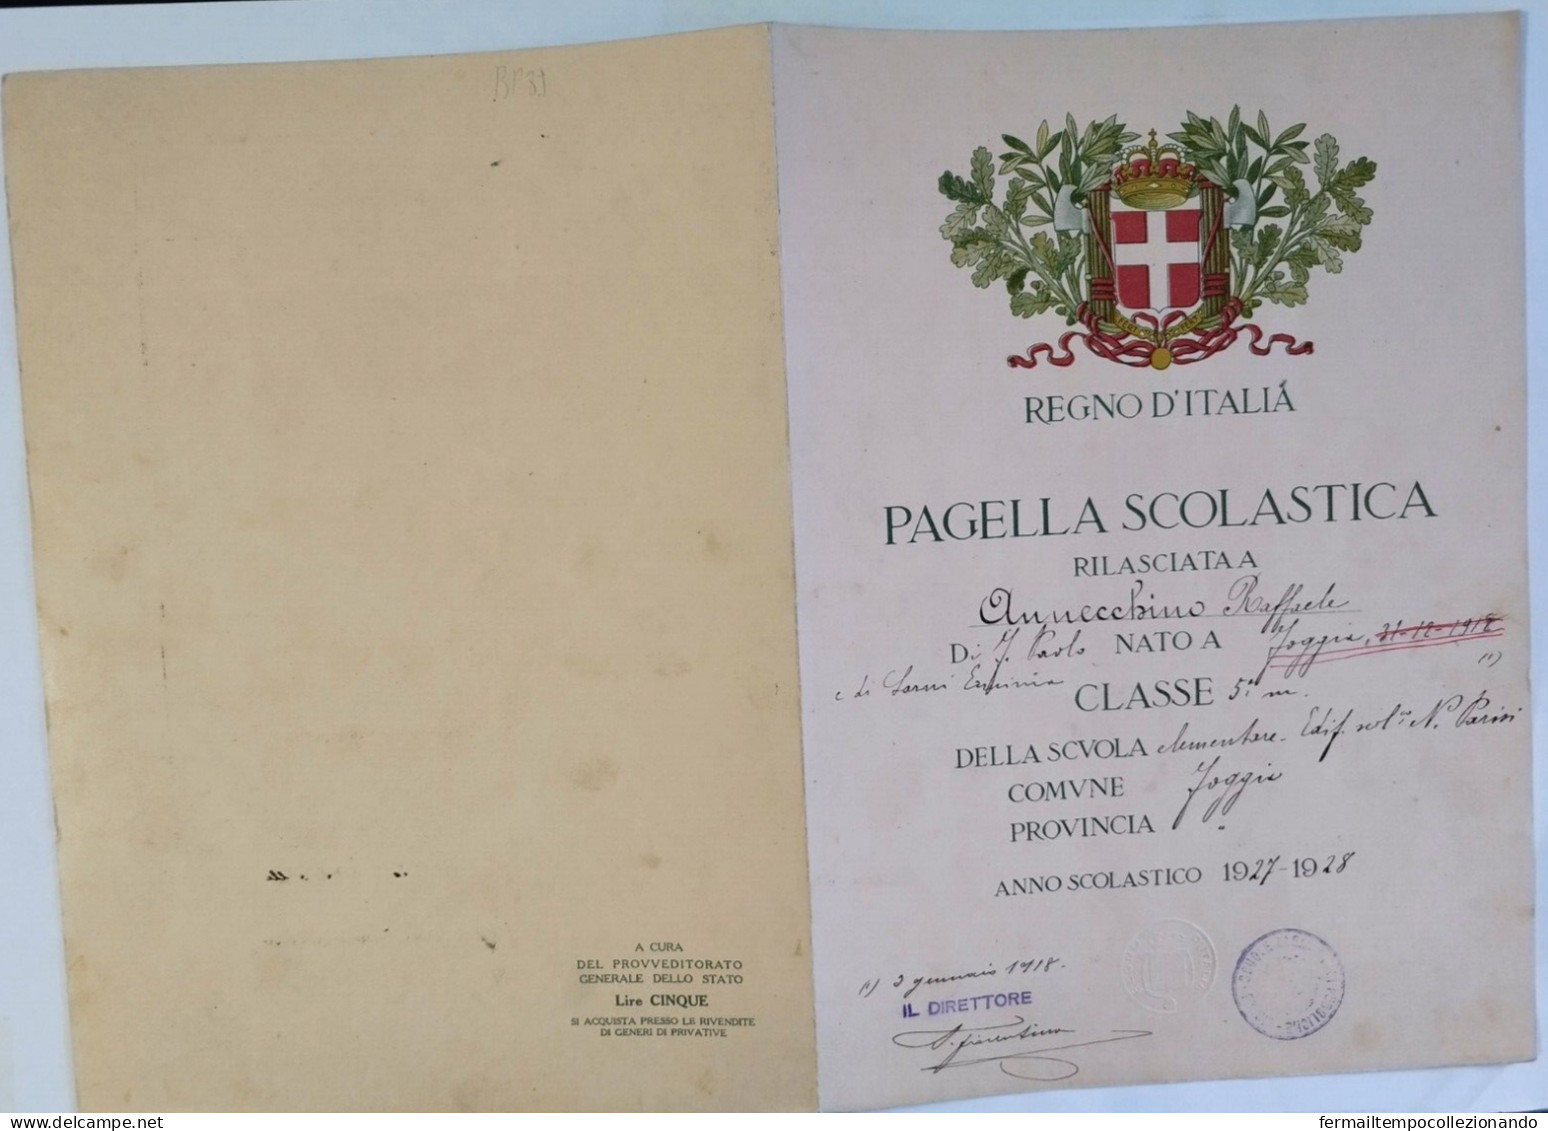 Bp89 Pagella Fascista Opera Balilla Regno D'italia Foggia 1928 - Diplômes & Bulletins Scolaires